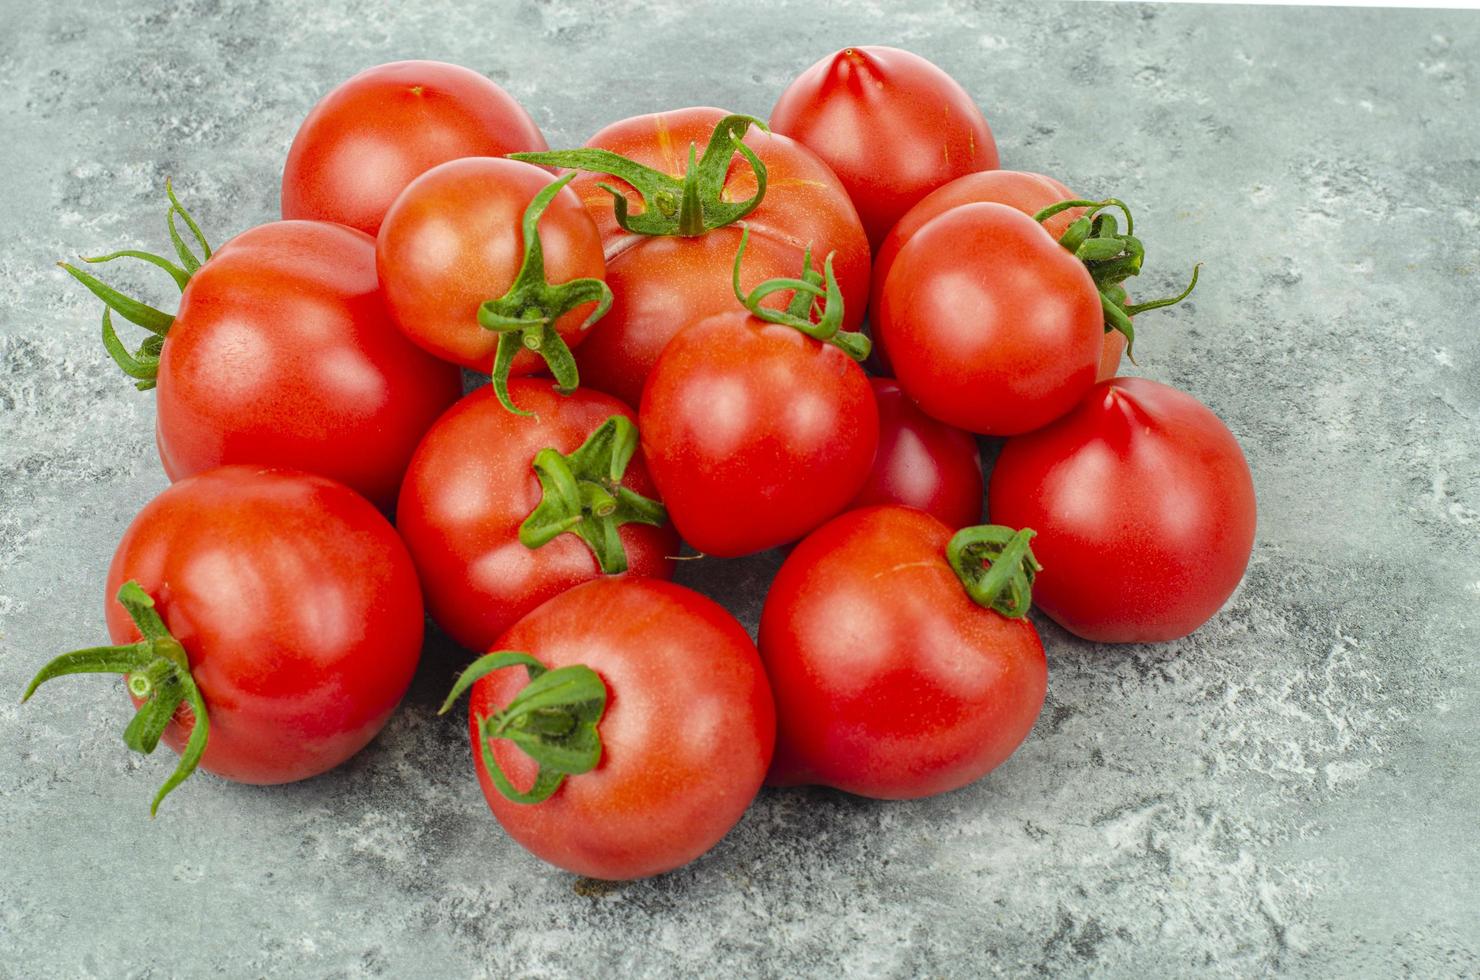 stelletje rijpe tomaten op blauw-grijze achtergrond. studio foto